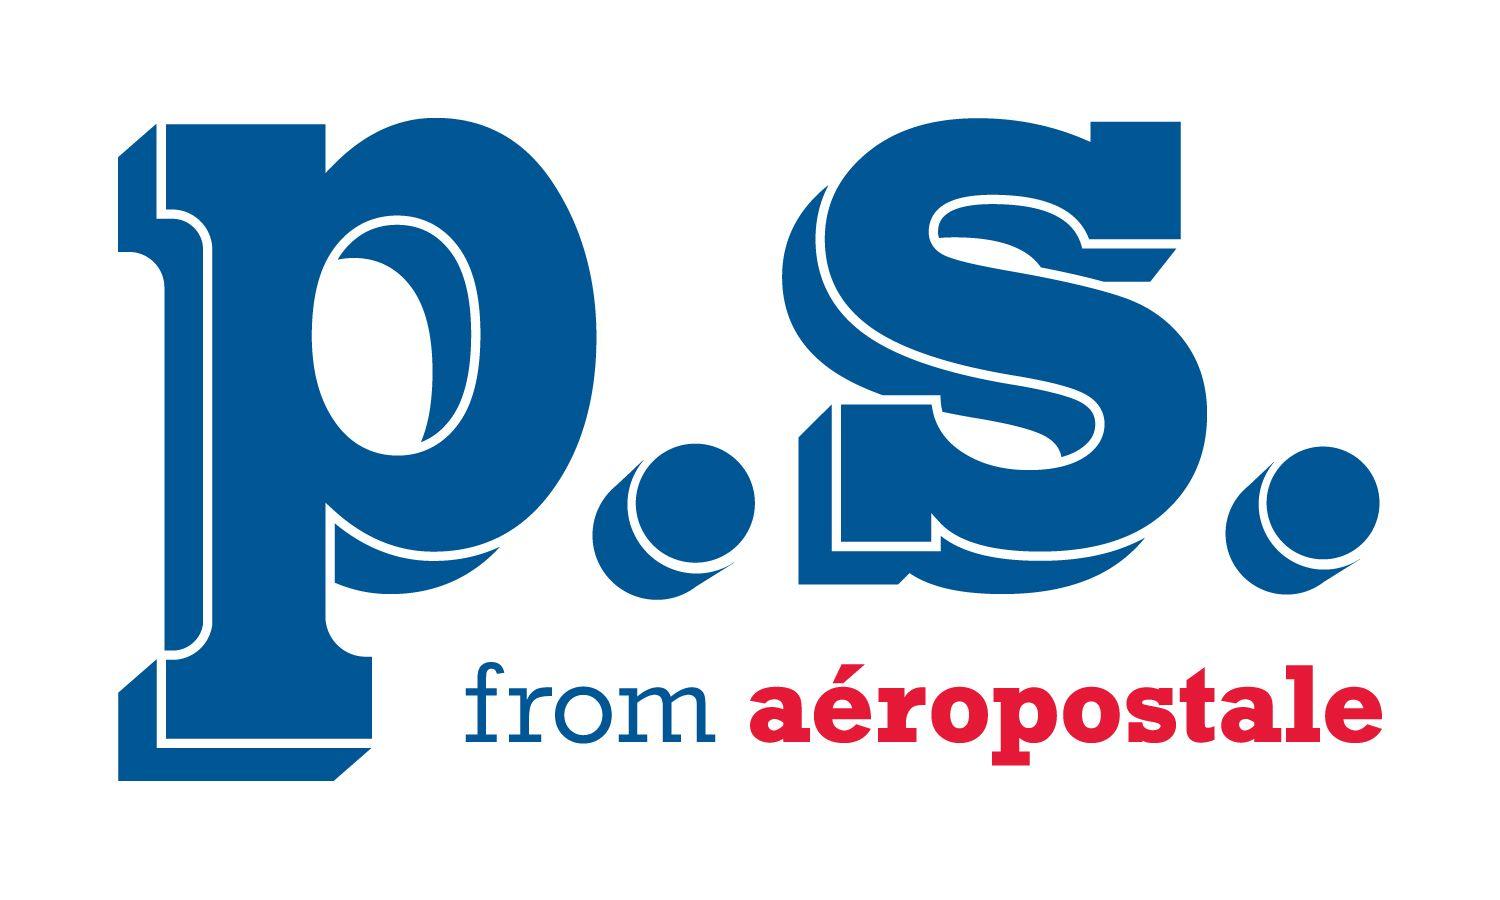 Aeropastle Logo - Image - P.S. from Aeropostale logo.jpg | Logofanonpedia | FANDOM ...